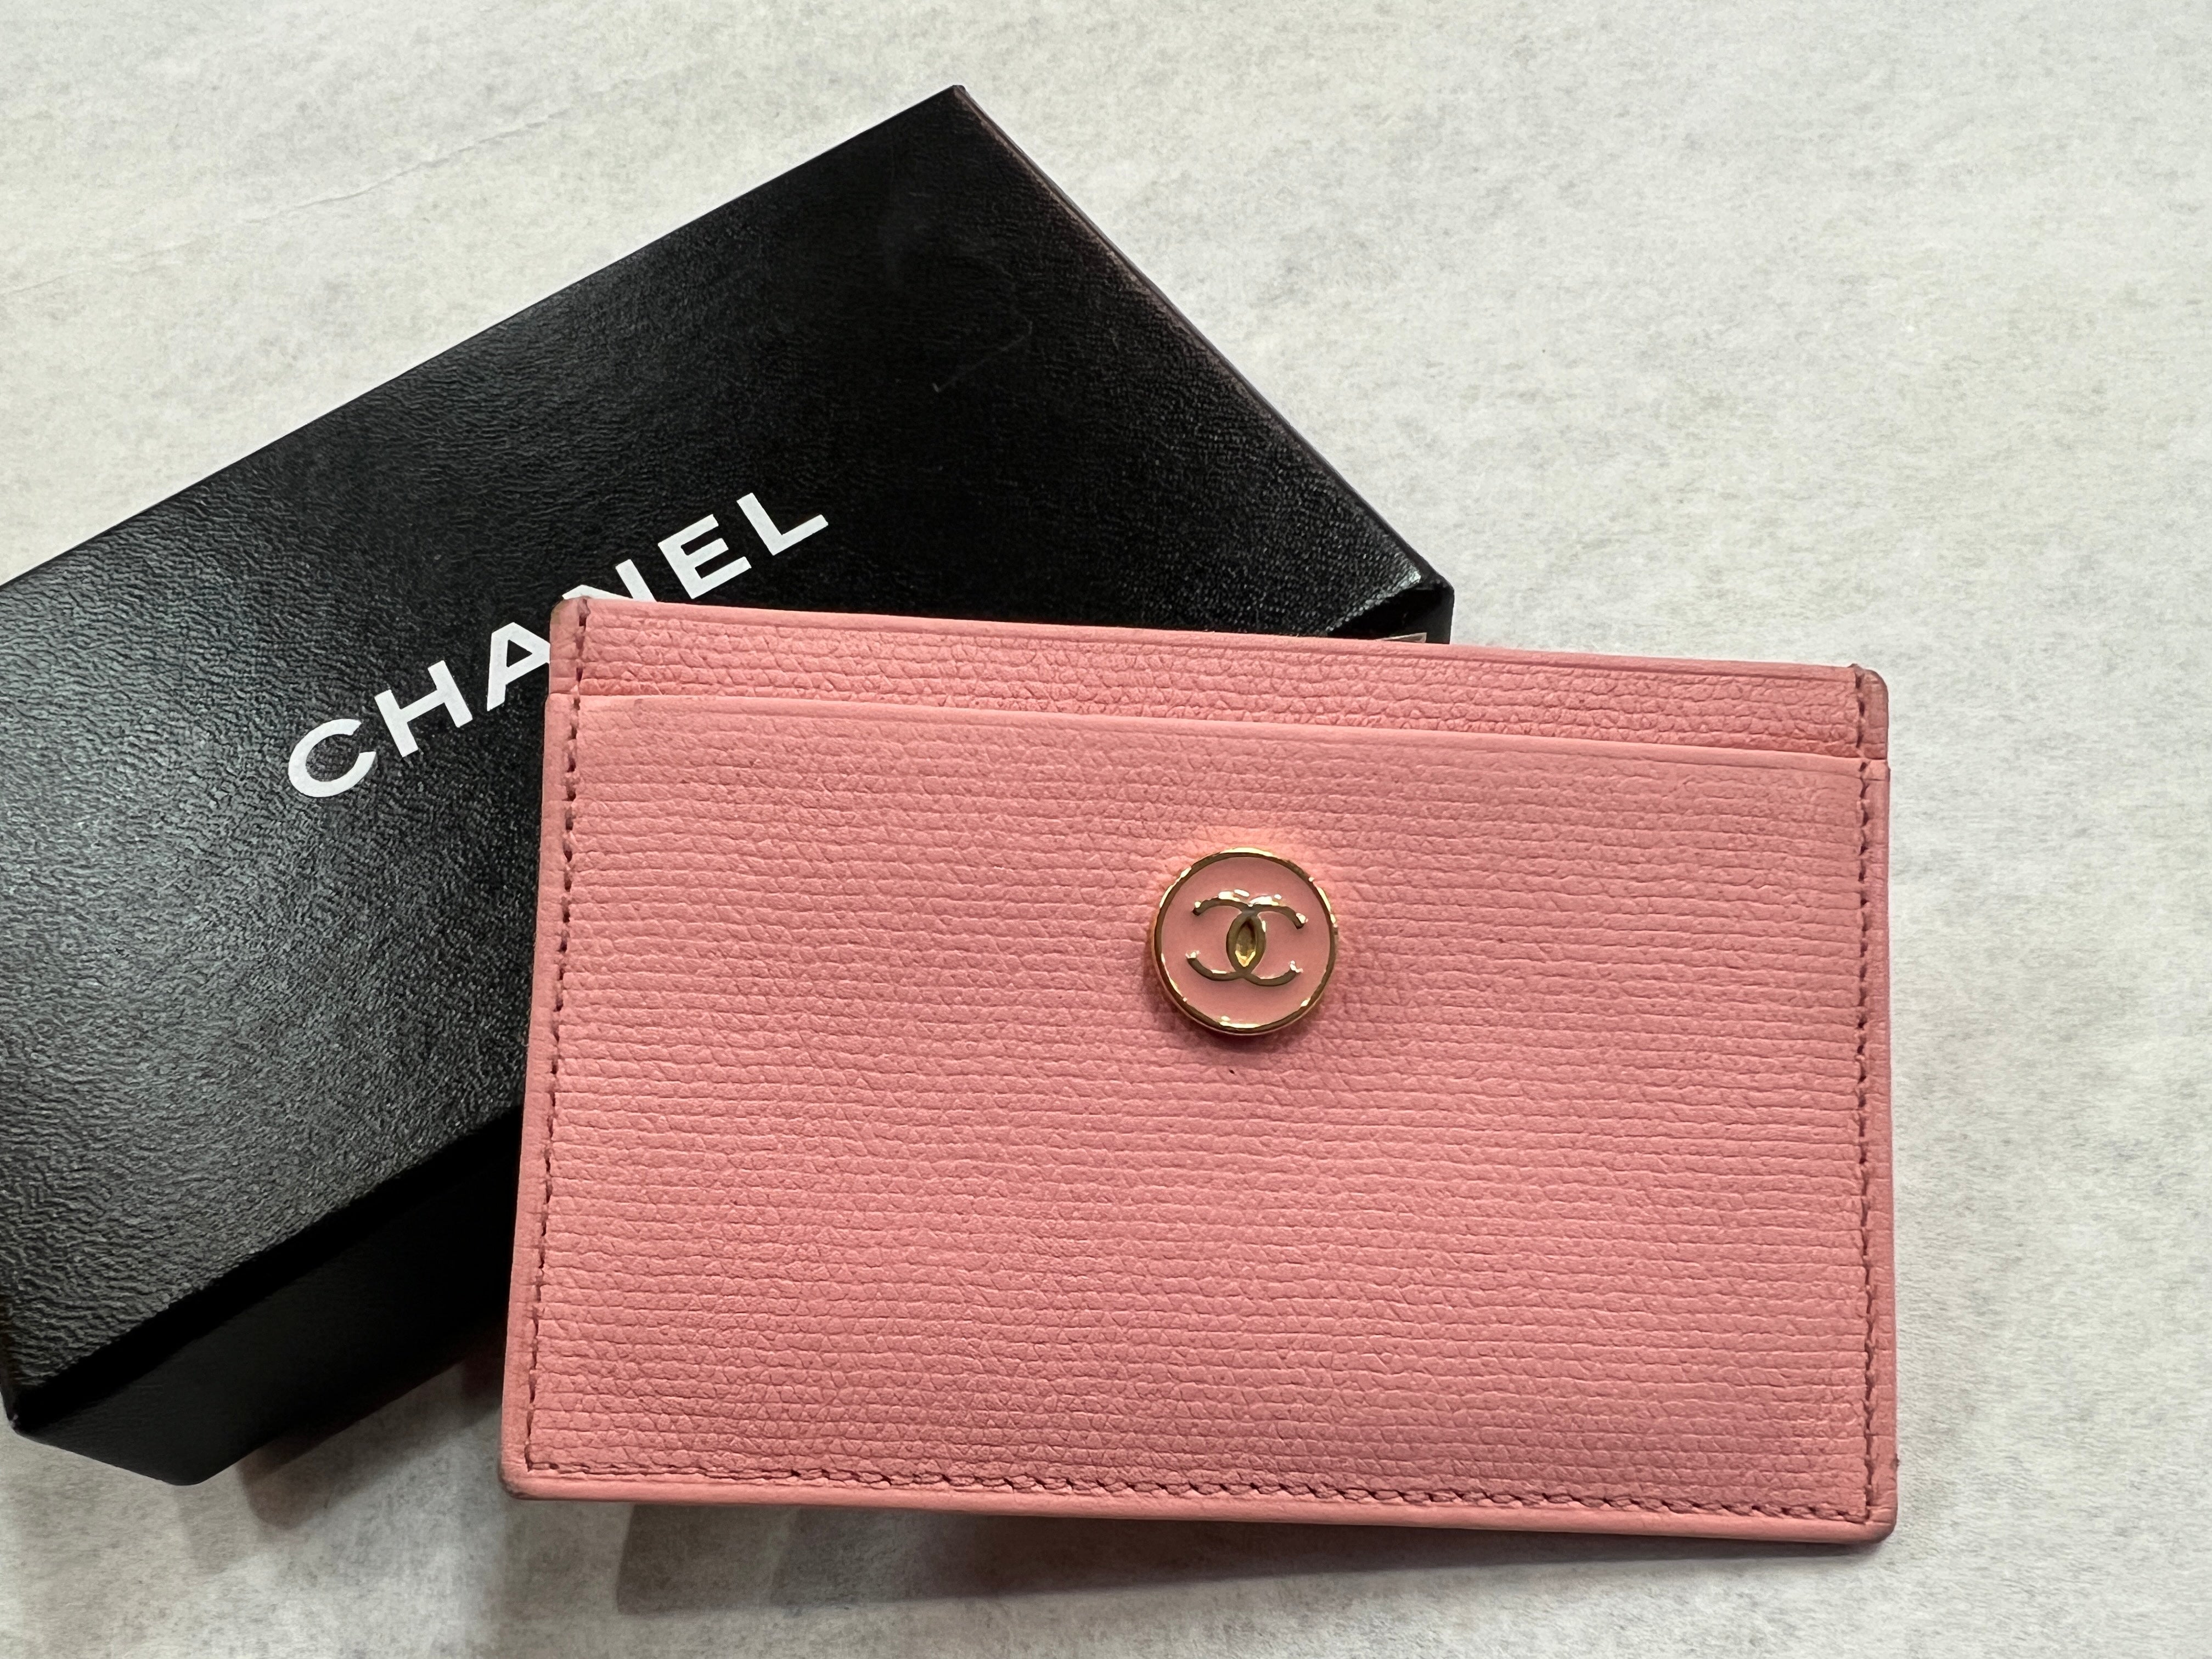 Chanel Cc Button Line Cavar 6 Key Holder Case 12cz1005 Pink Leather Clutch, Chanel